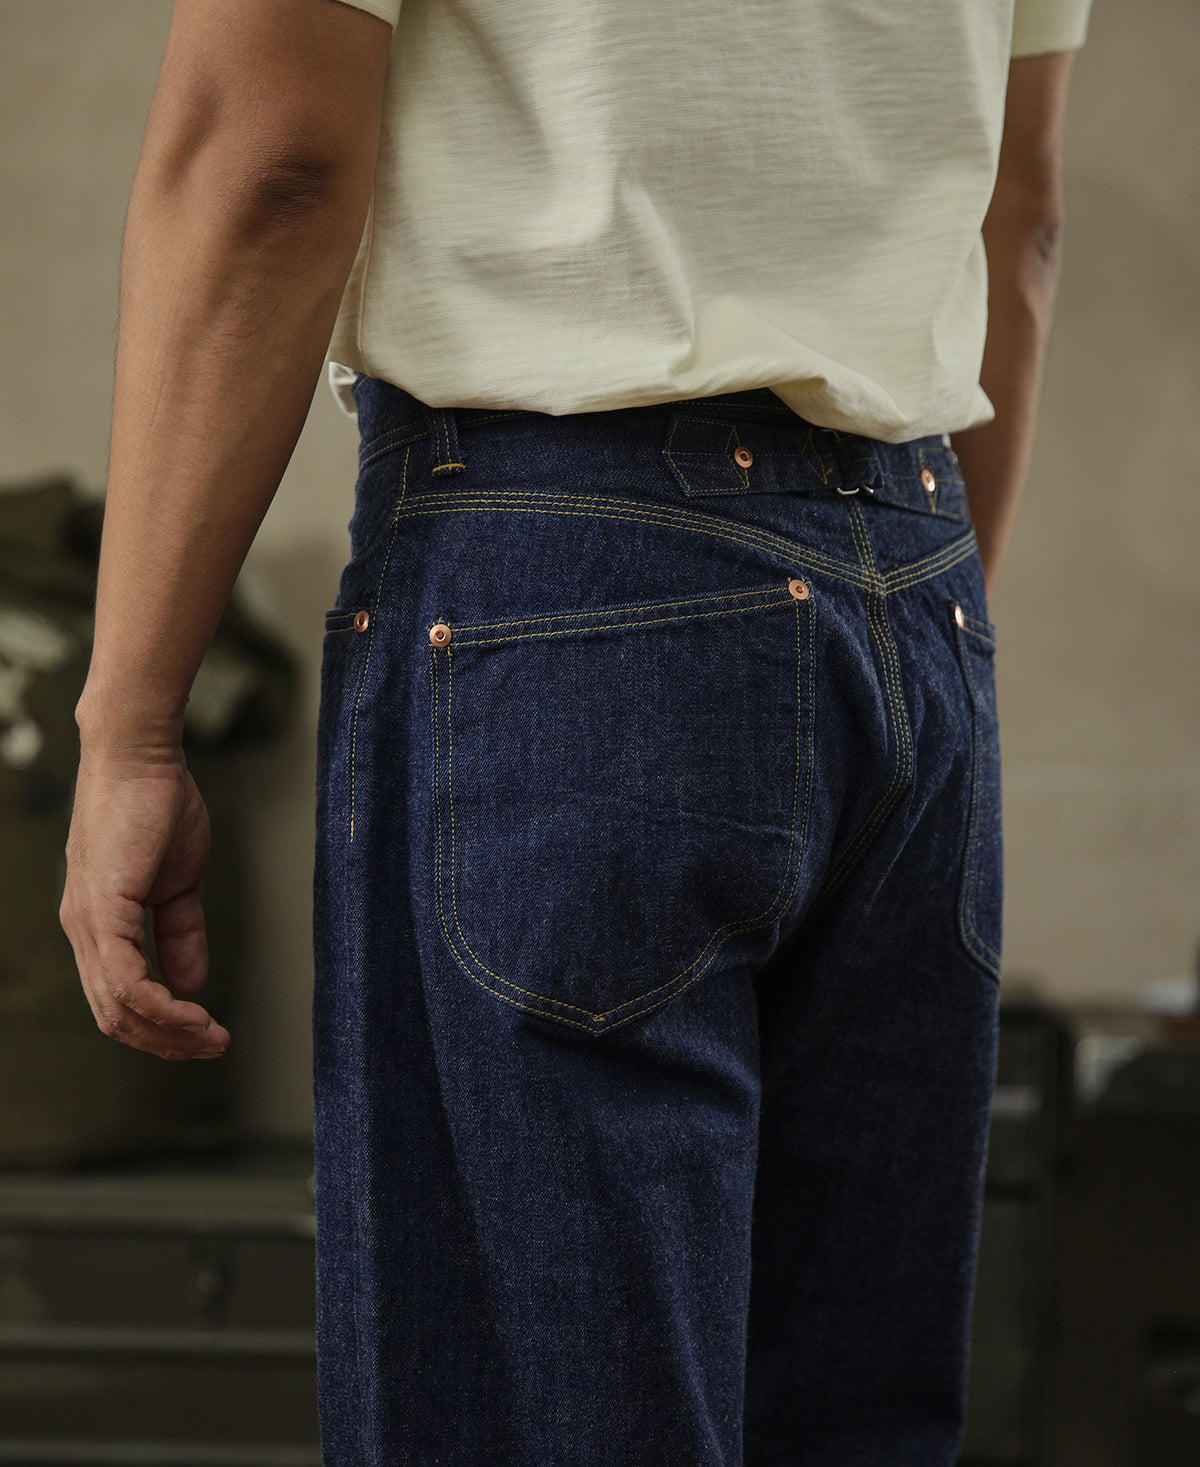 1910s 12.5 oz Straight Fit Selvedge Denim Jeans